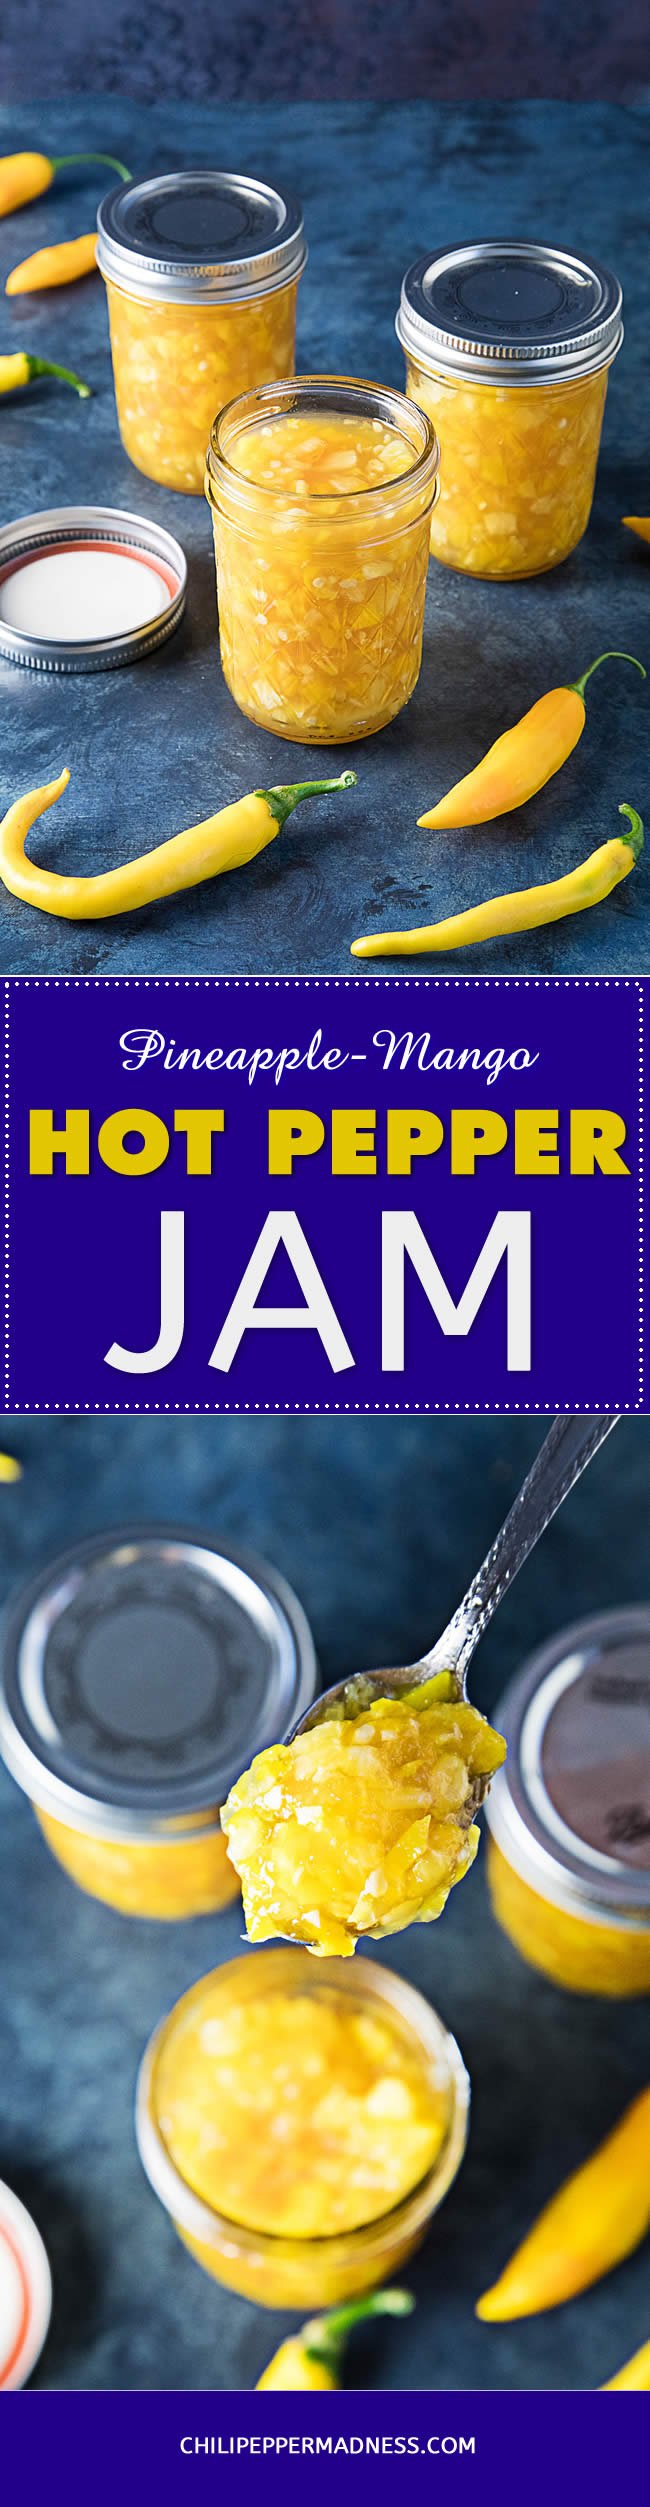 Pineapple-Mango-Hot Pepper Jam - Recipe